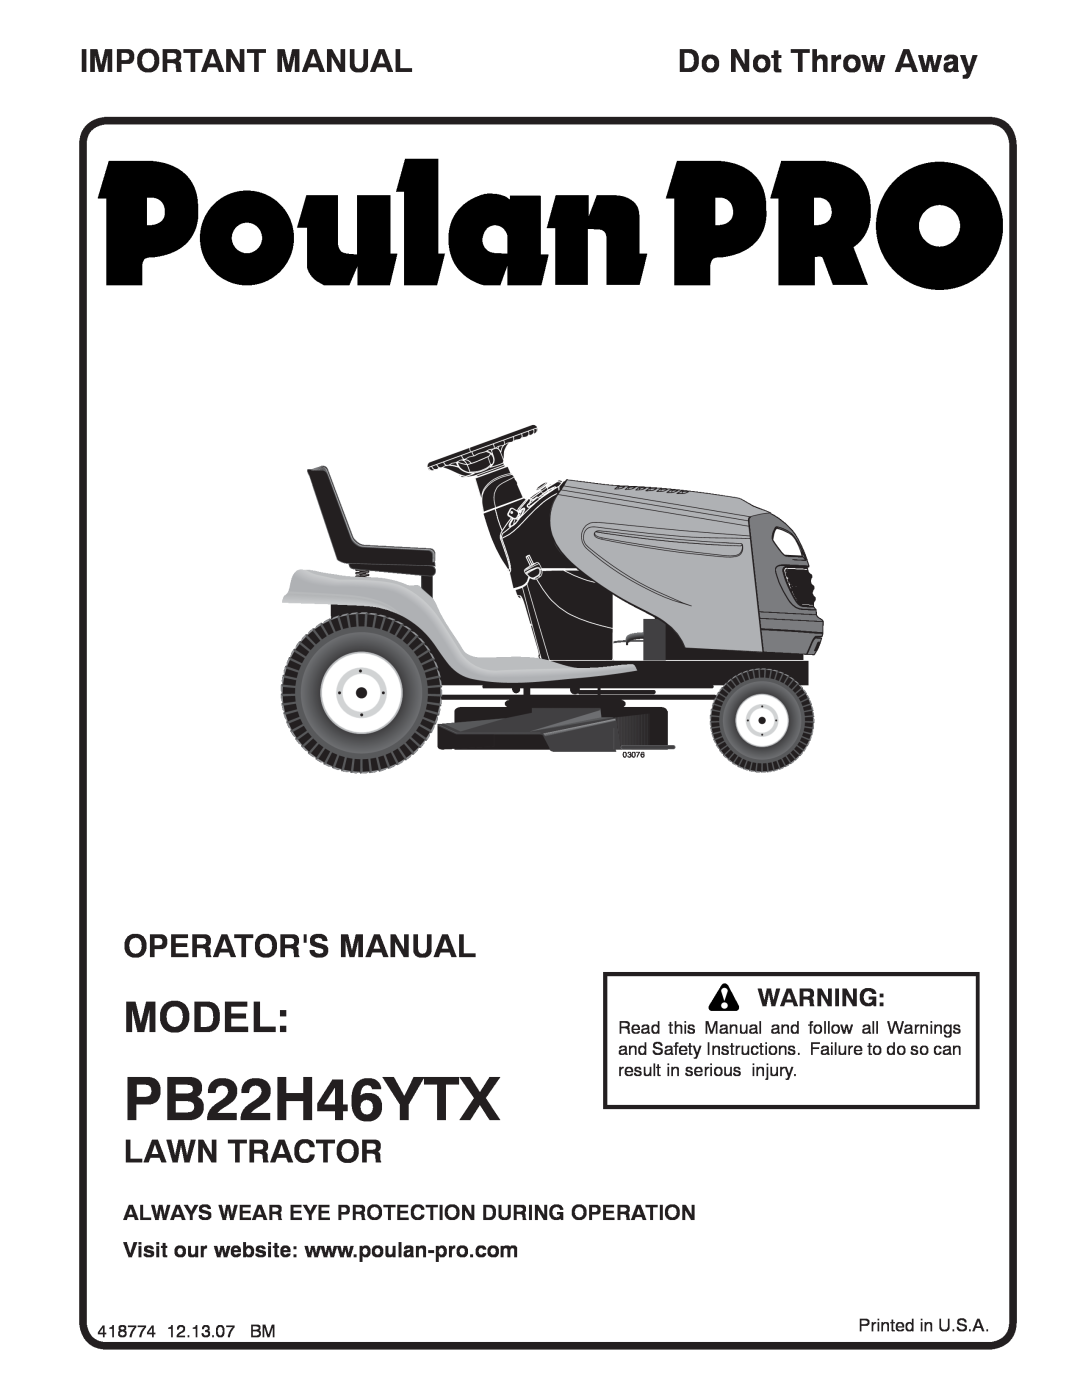 Poulan PB22H46YTX, 96042006900 manual Model, Important Manual, Operators Manual, Lawn Tractor, Do Not Throw Away, 03076 